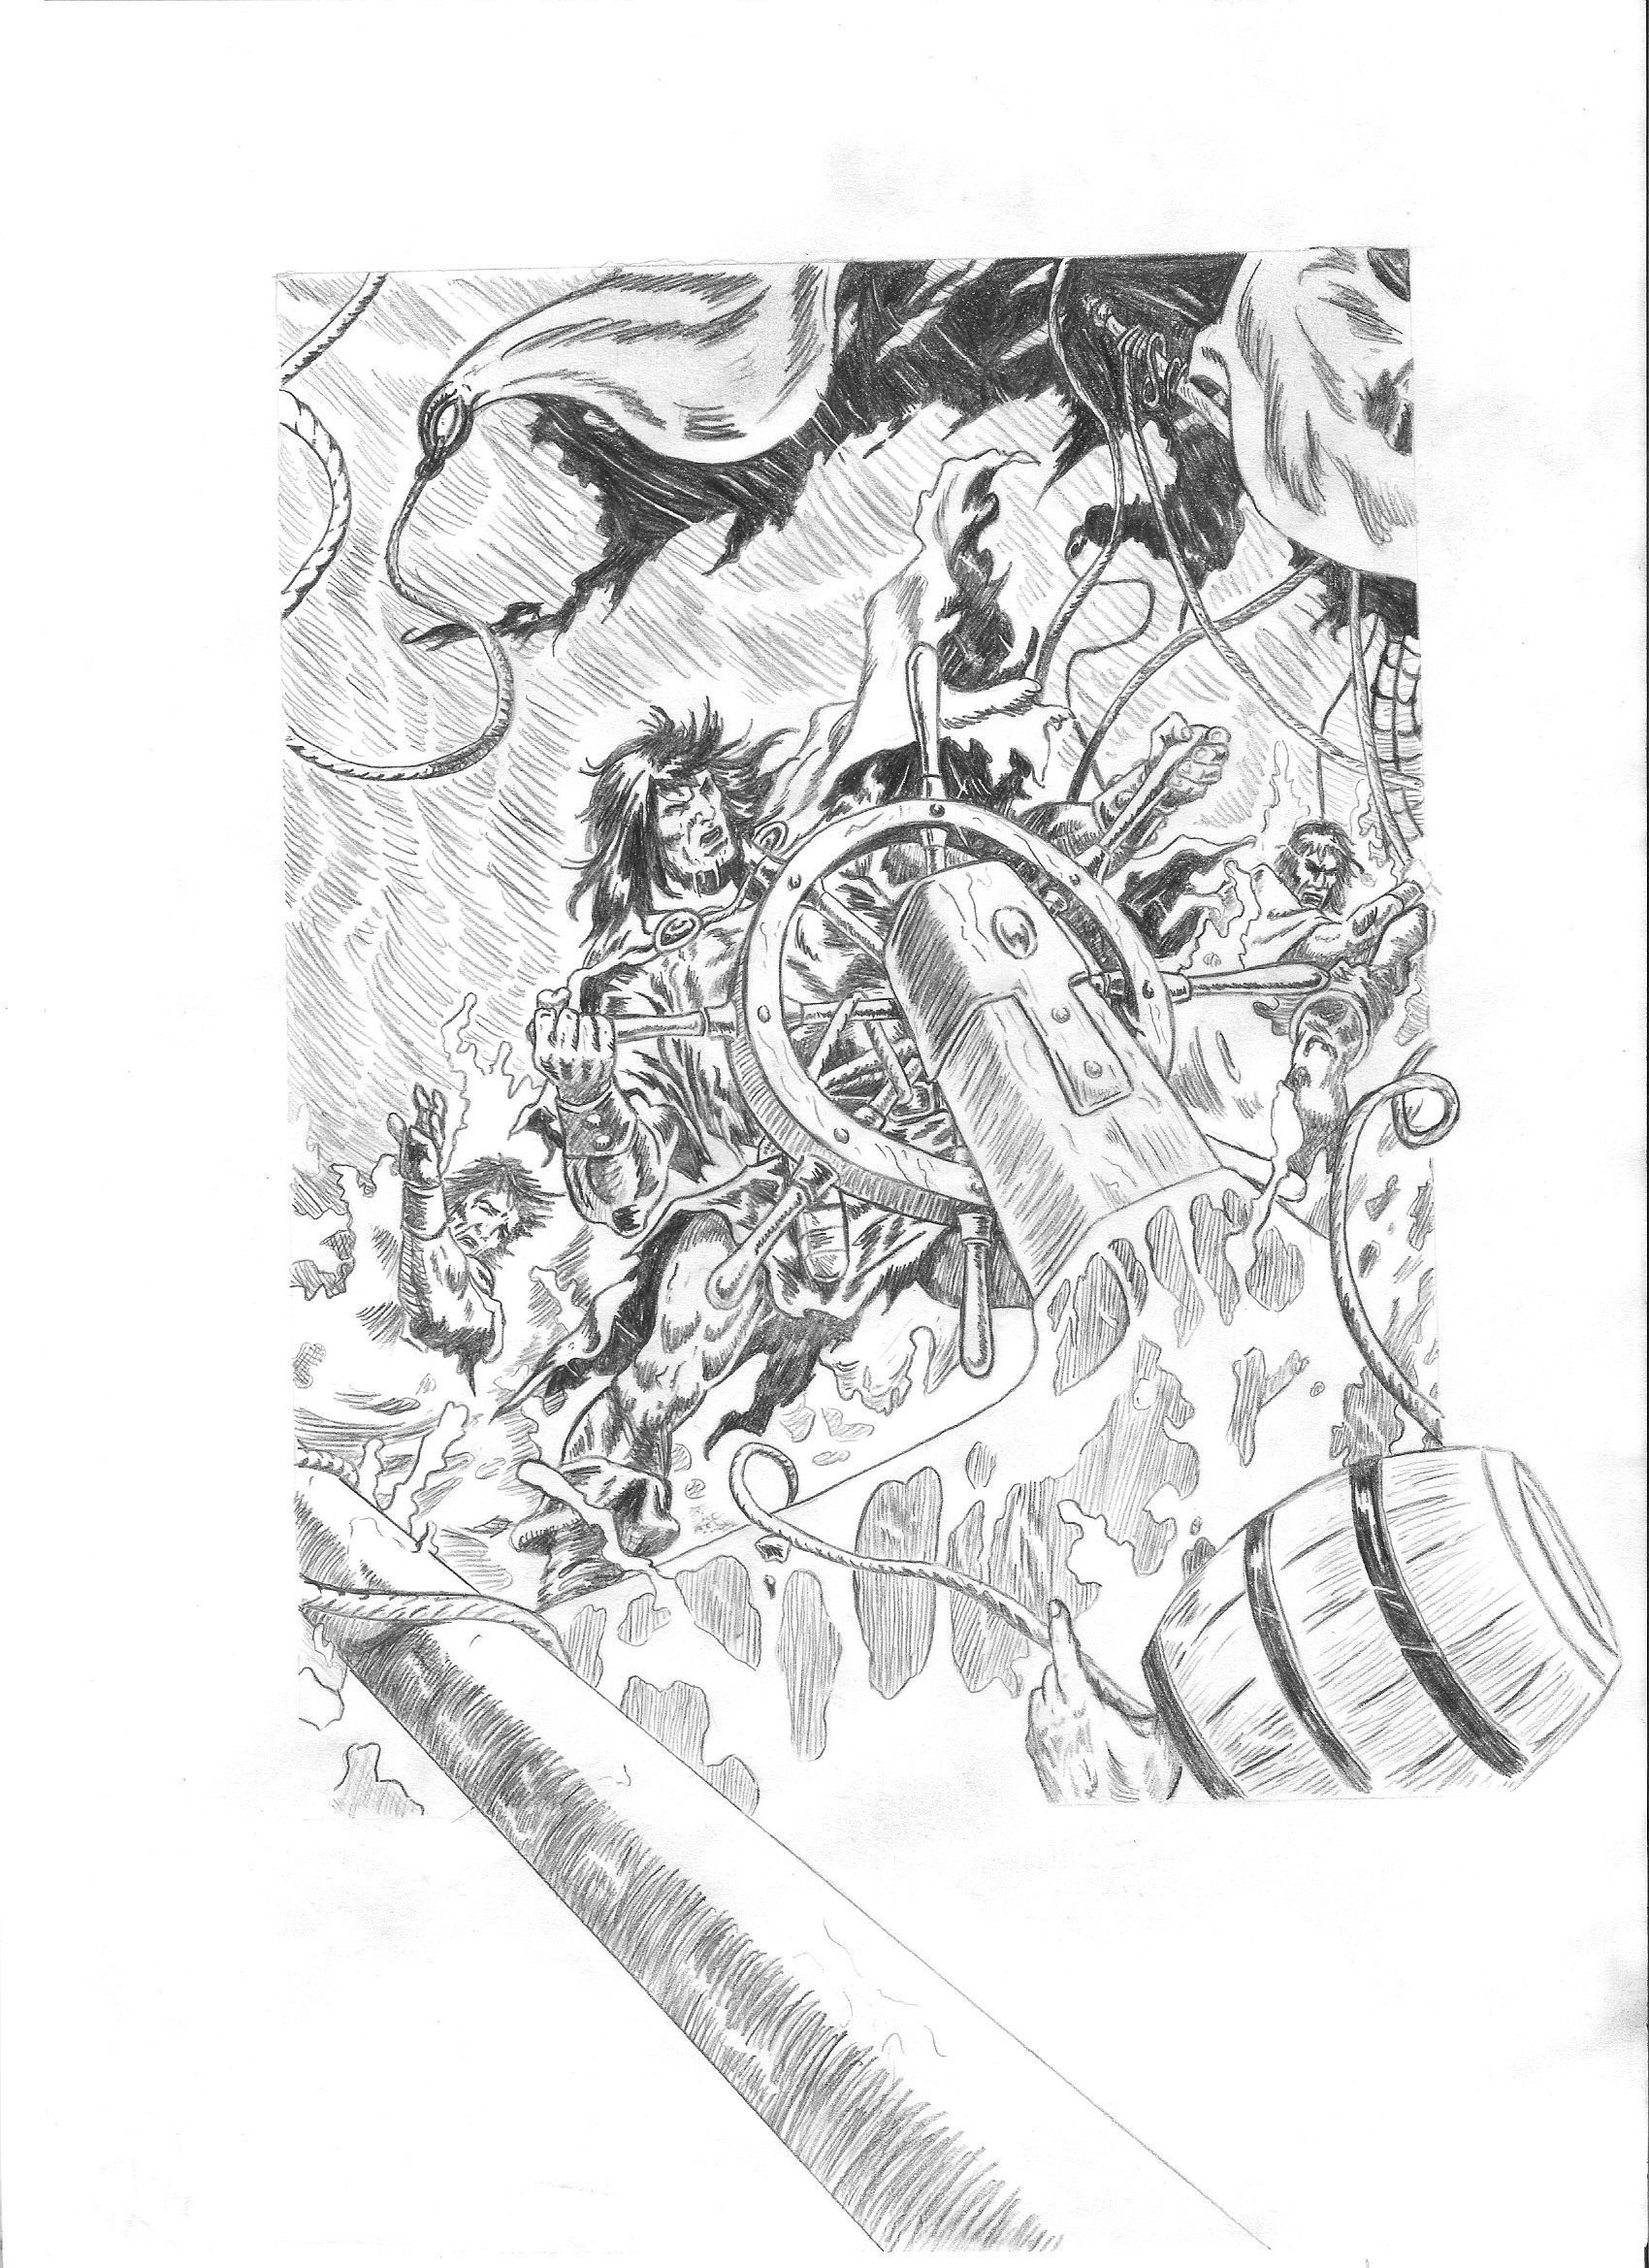 Les travaux de Barbarian Fan : Atelier 2 - Page 12 Conan19964